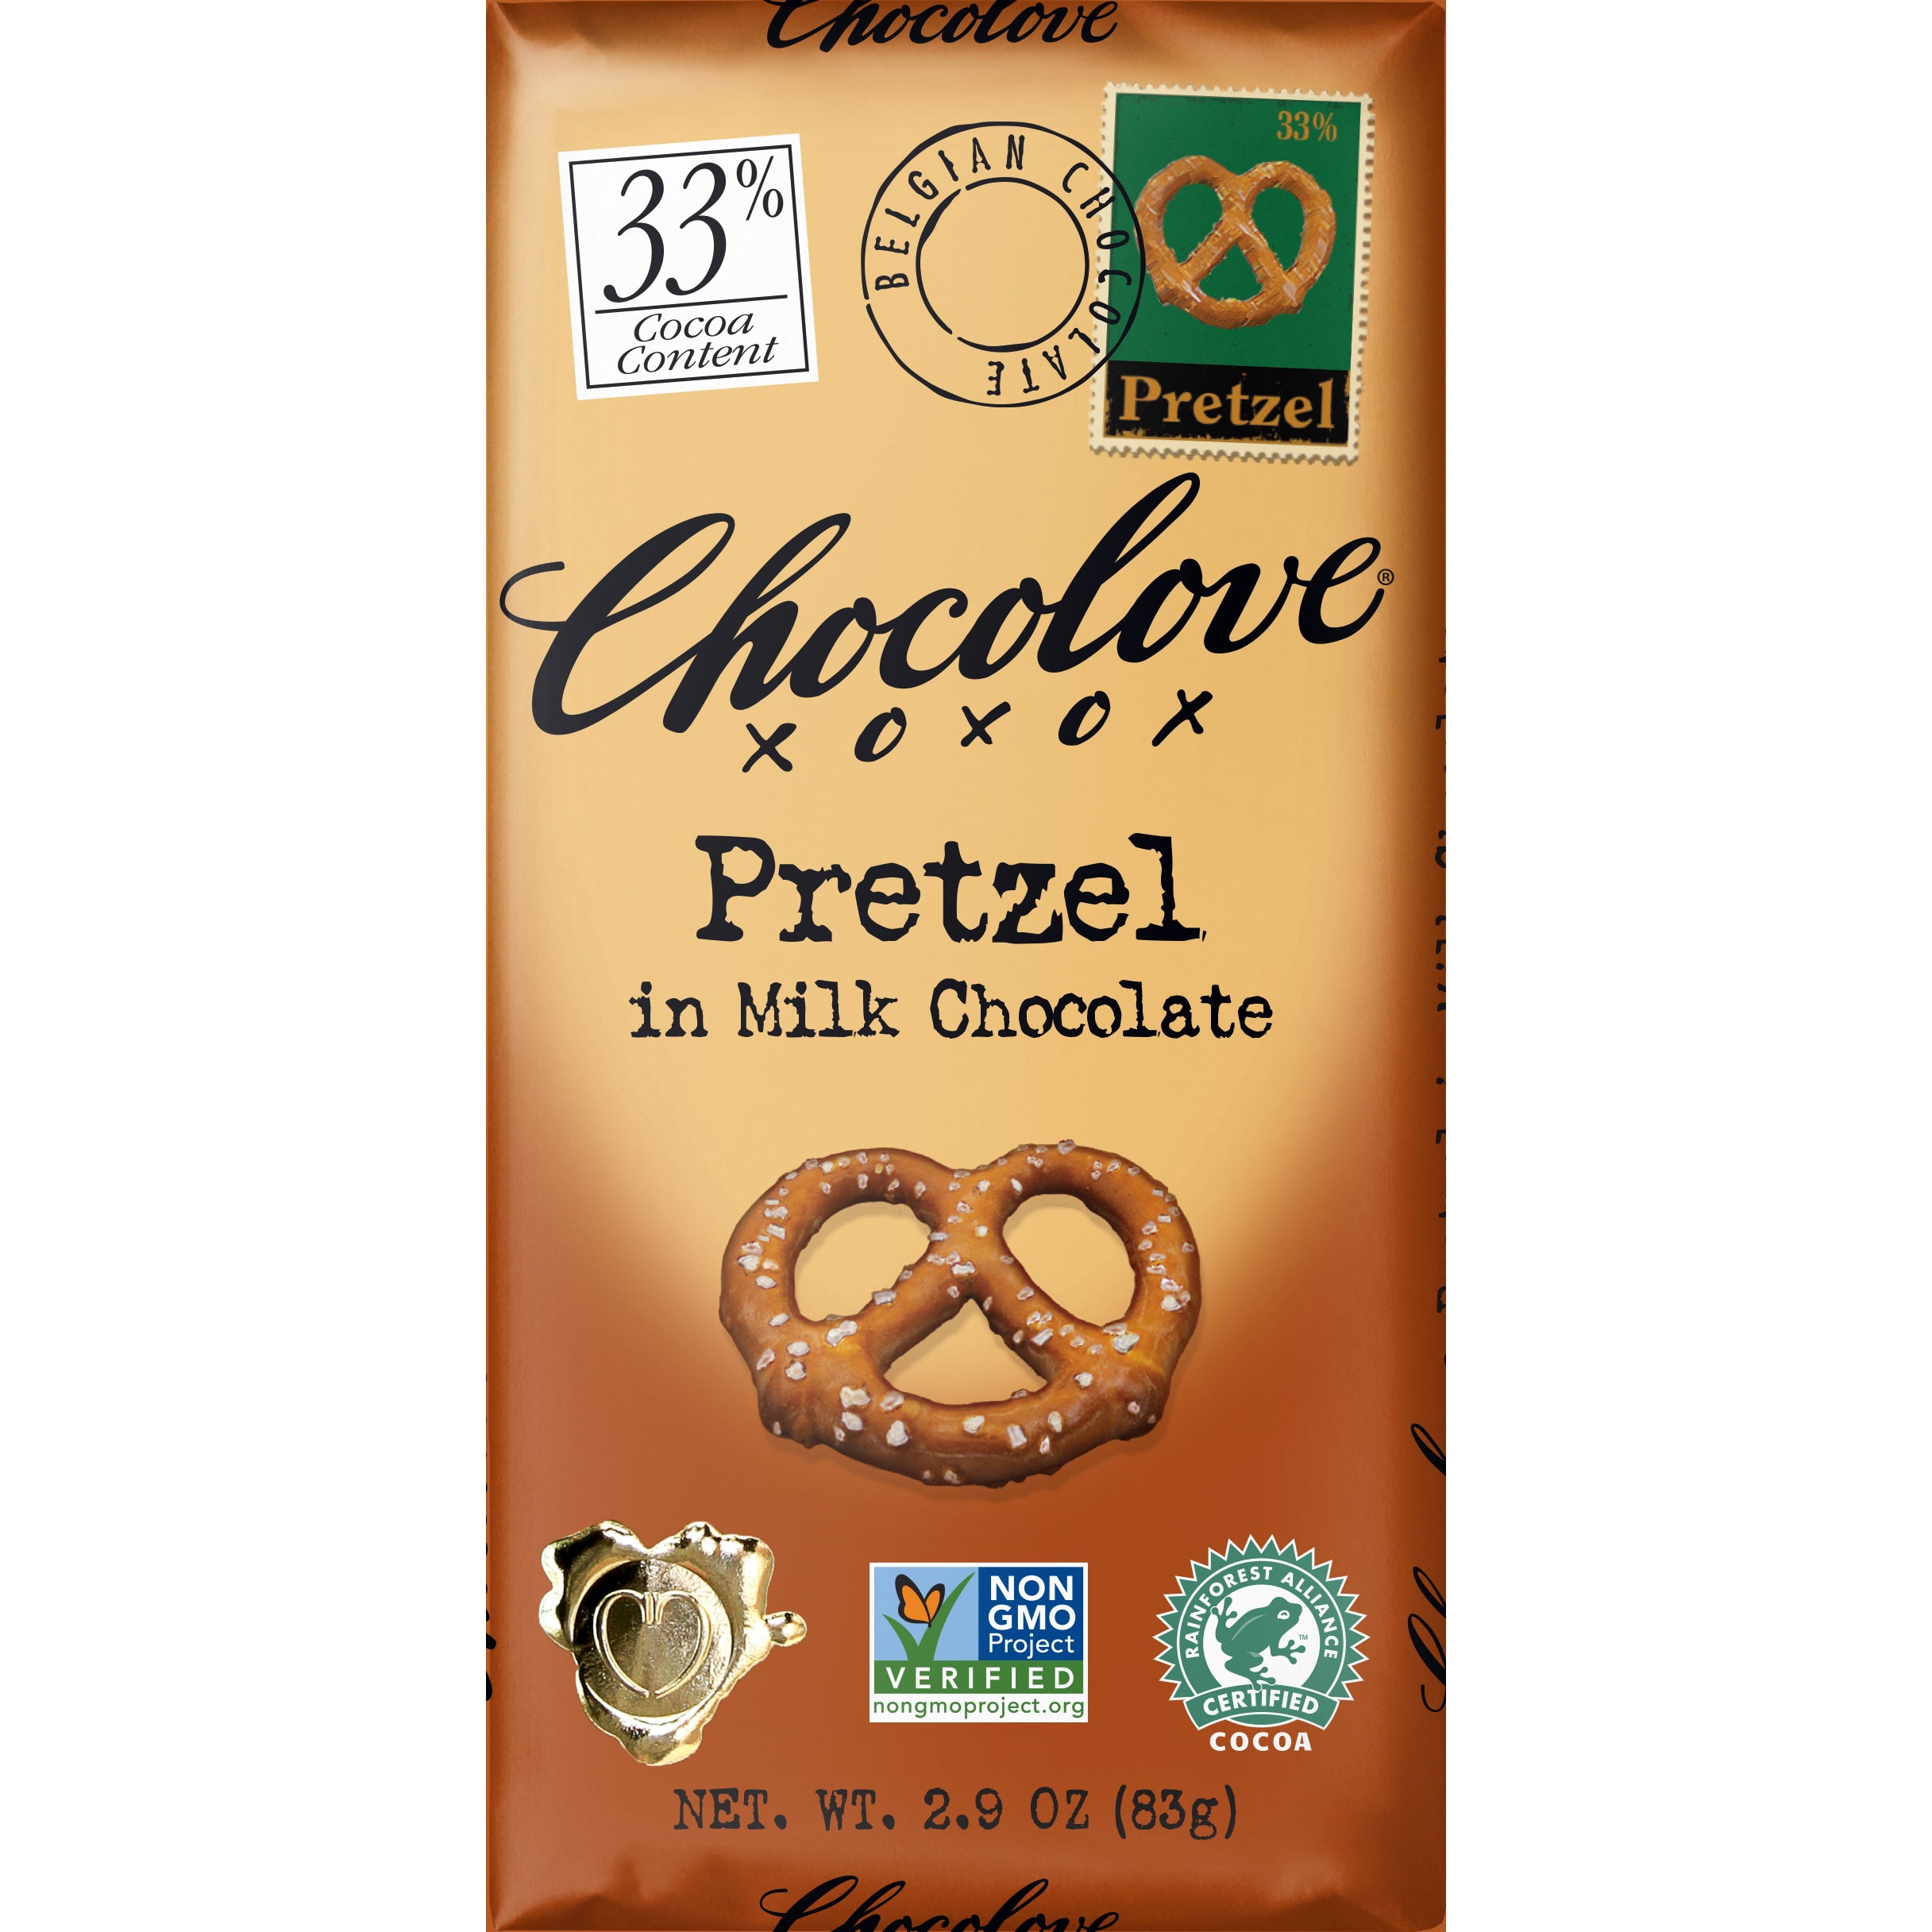 Chocolove Milk Chocolate Pretzel Bar 3.2oz